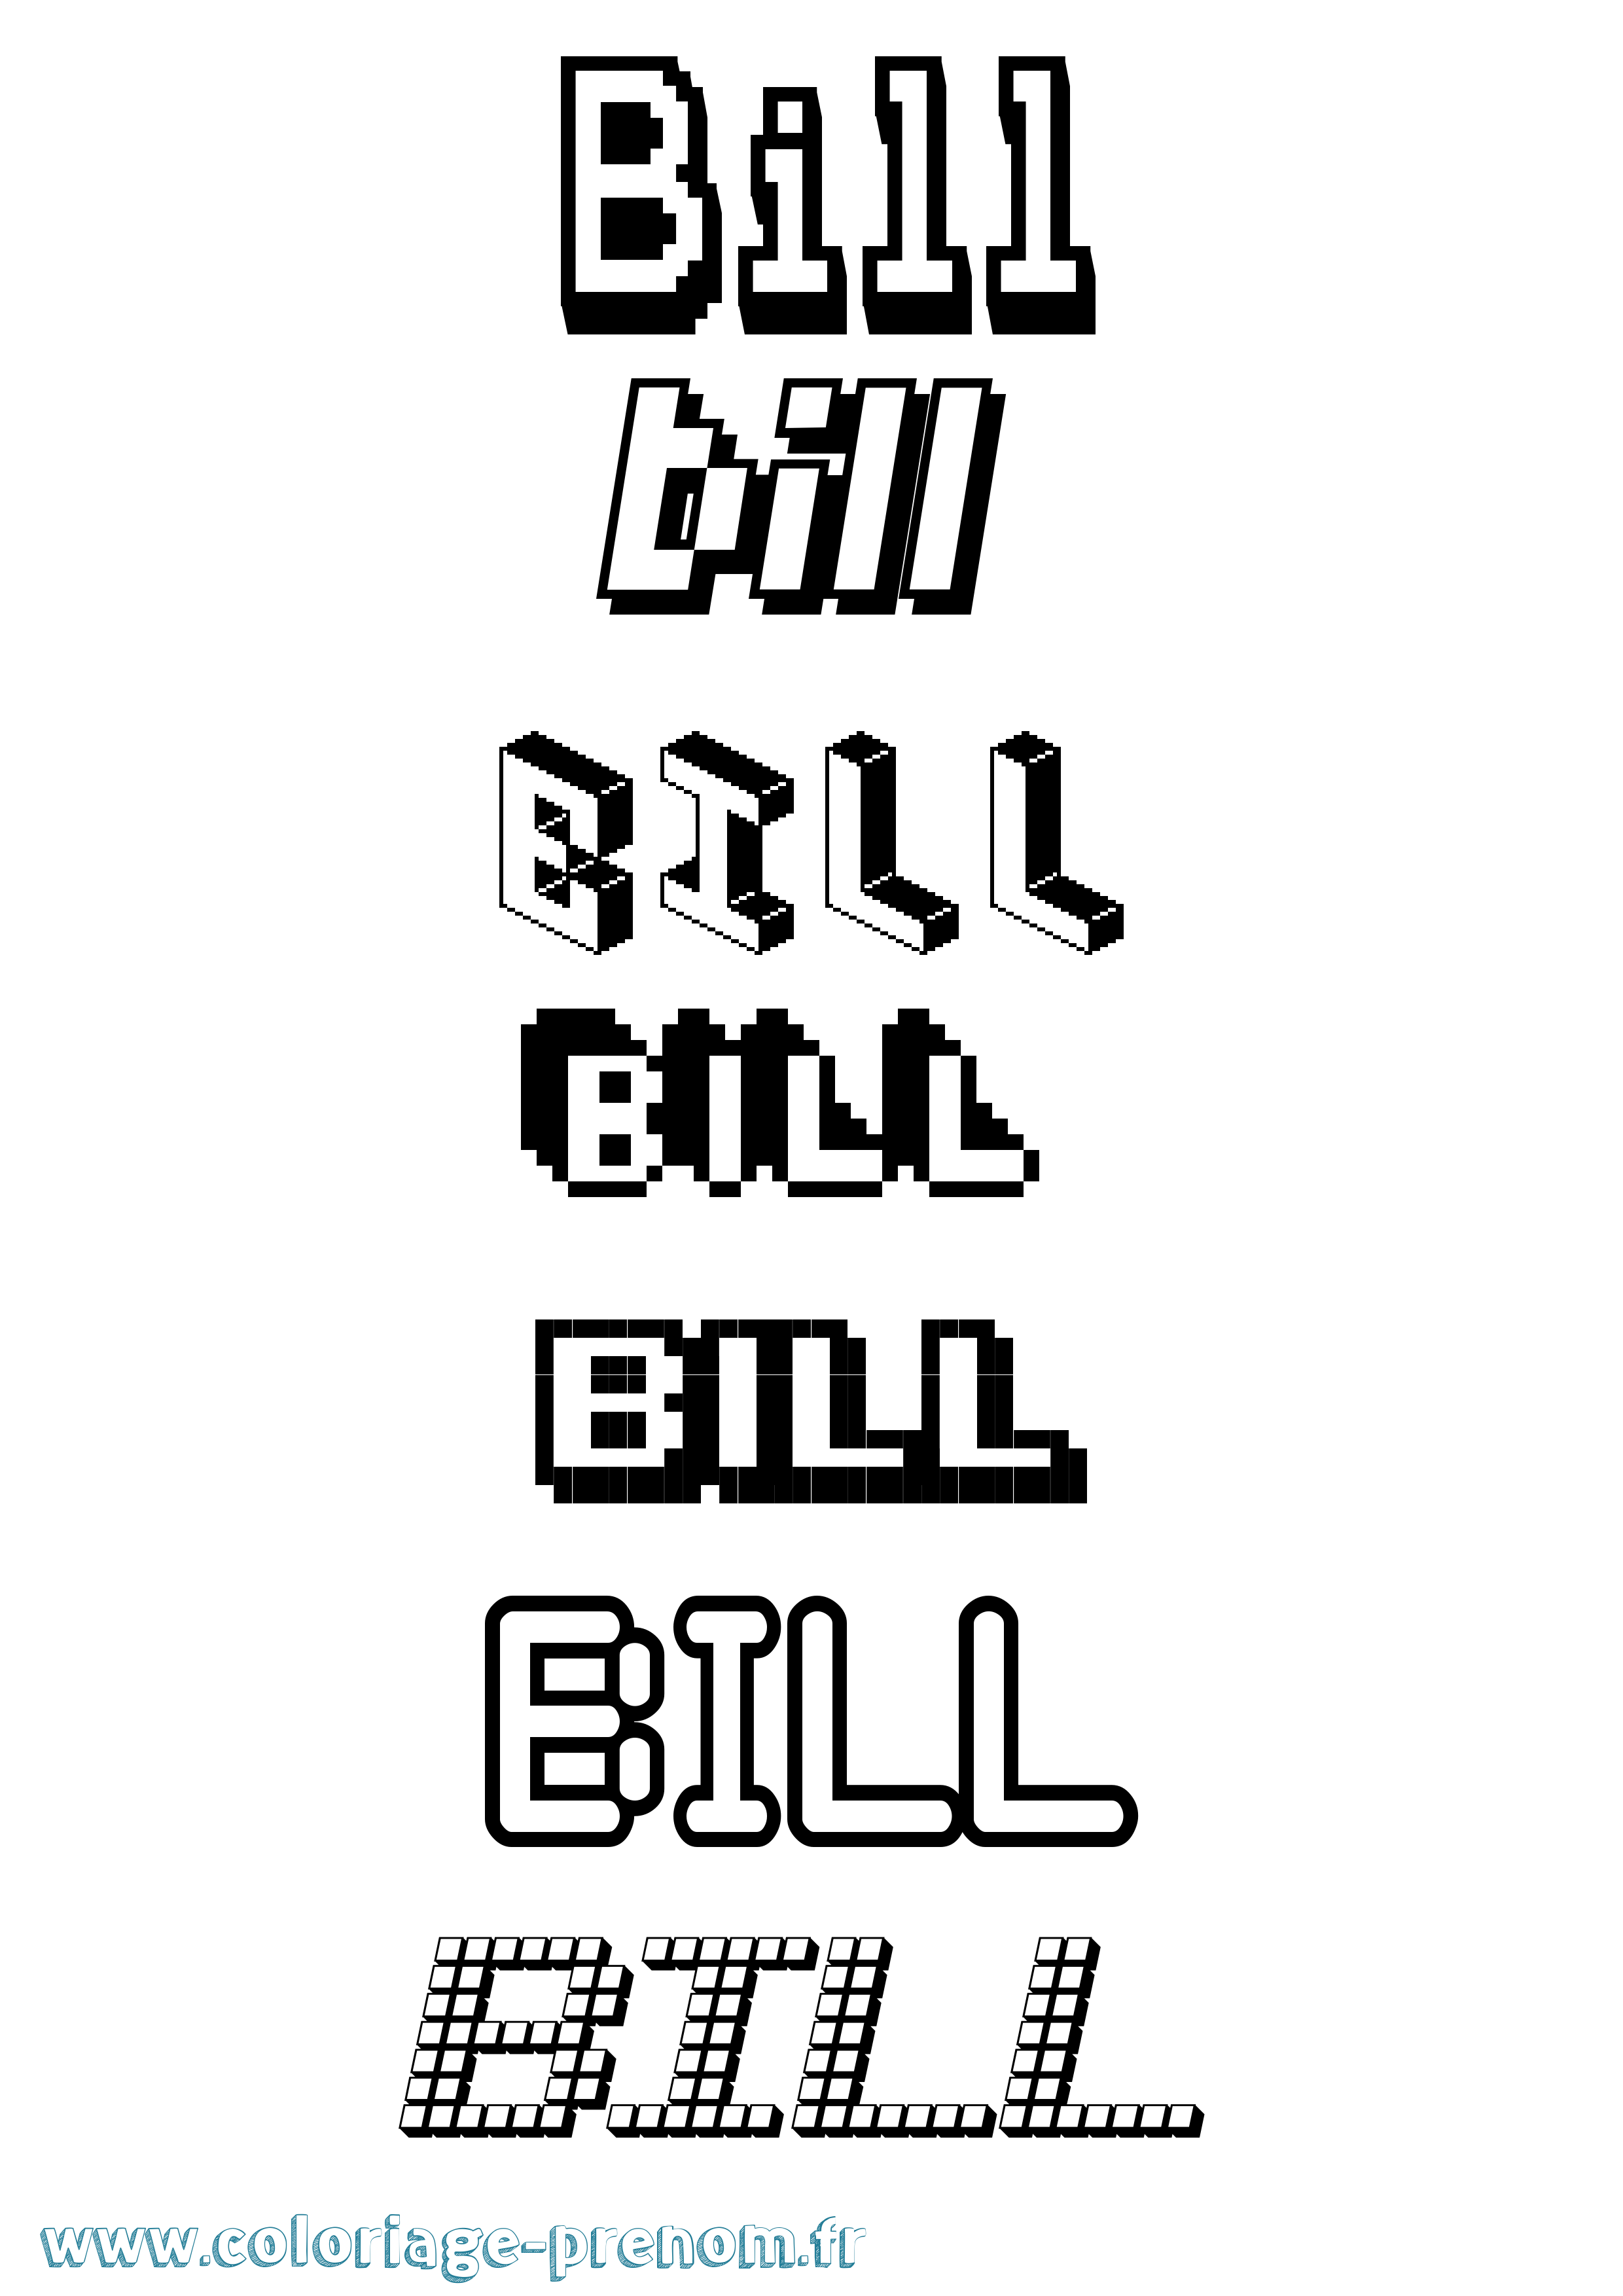 Coloriage prénom Bill Pixel